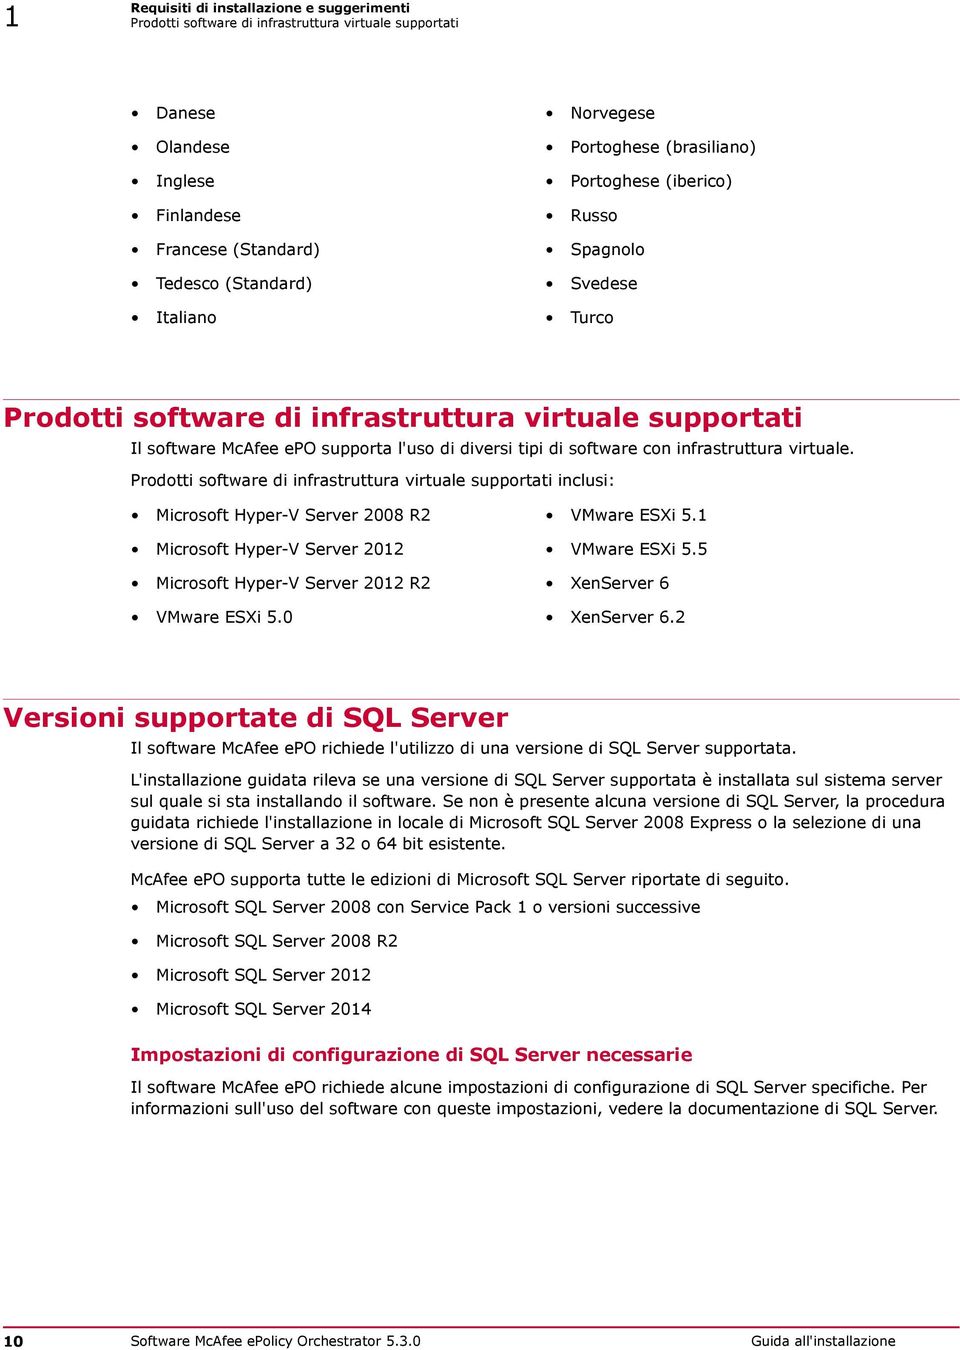 infrastruttura virtuale. Prodotti software di infrastruttura virtuale supportati inclusi: Microsoft Hyper-V Server 2008 R2 VMware ESXi 5.1 Microsoft Hyper-V Server 2012 VMware ESXi 5.